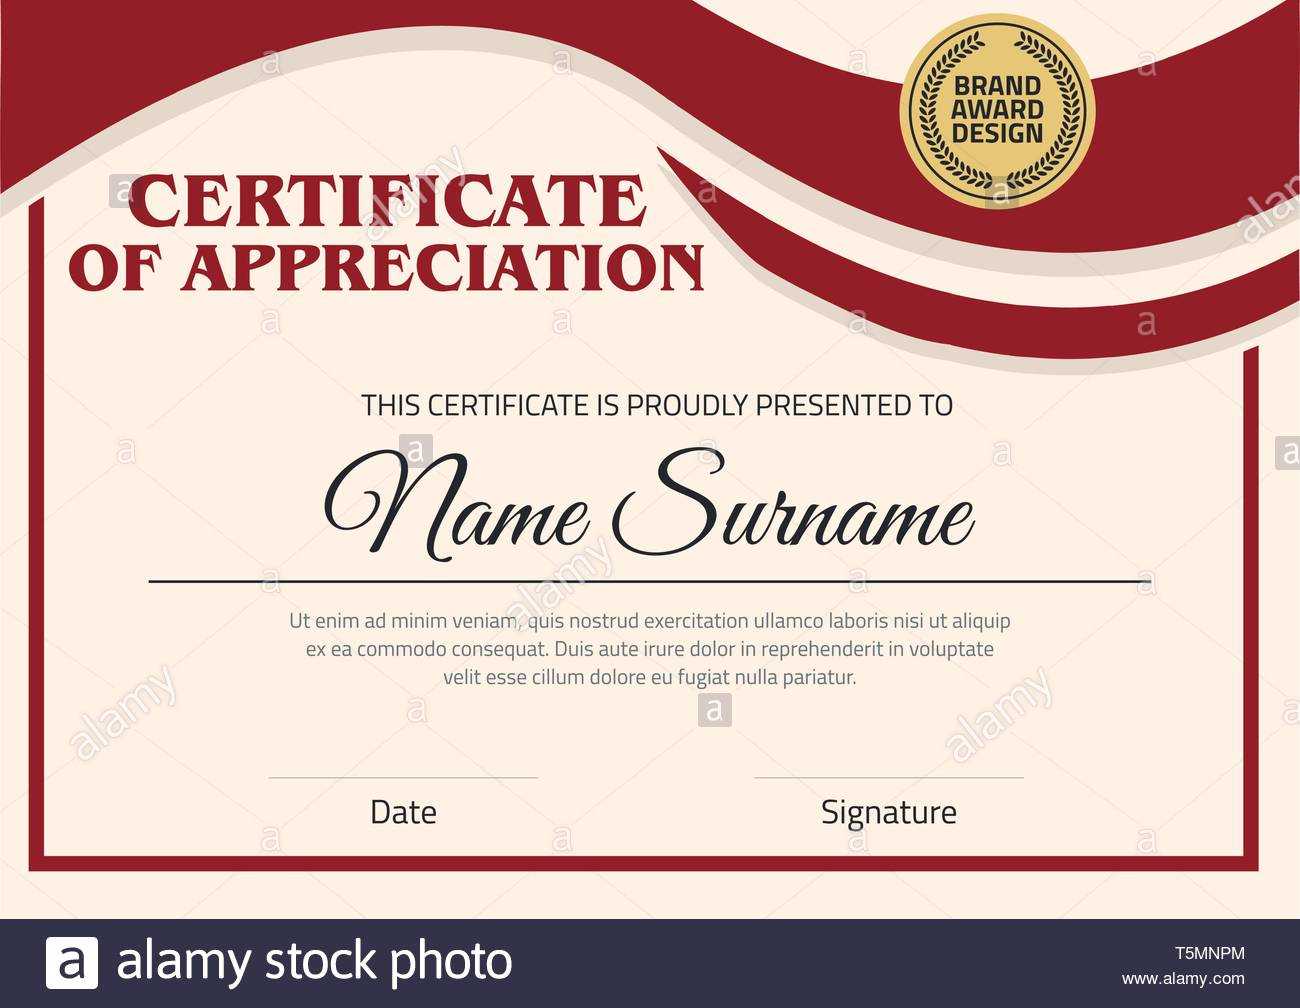 Vector Certificate Template. Illustration Certificate In A4 Within Certificate Template Size